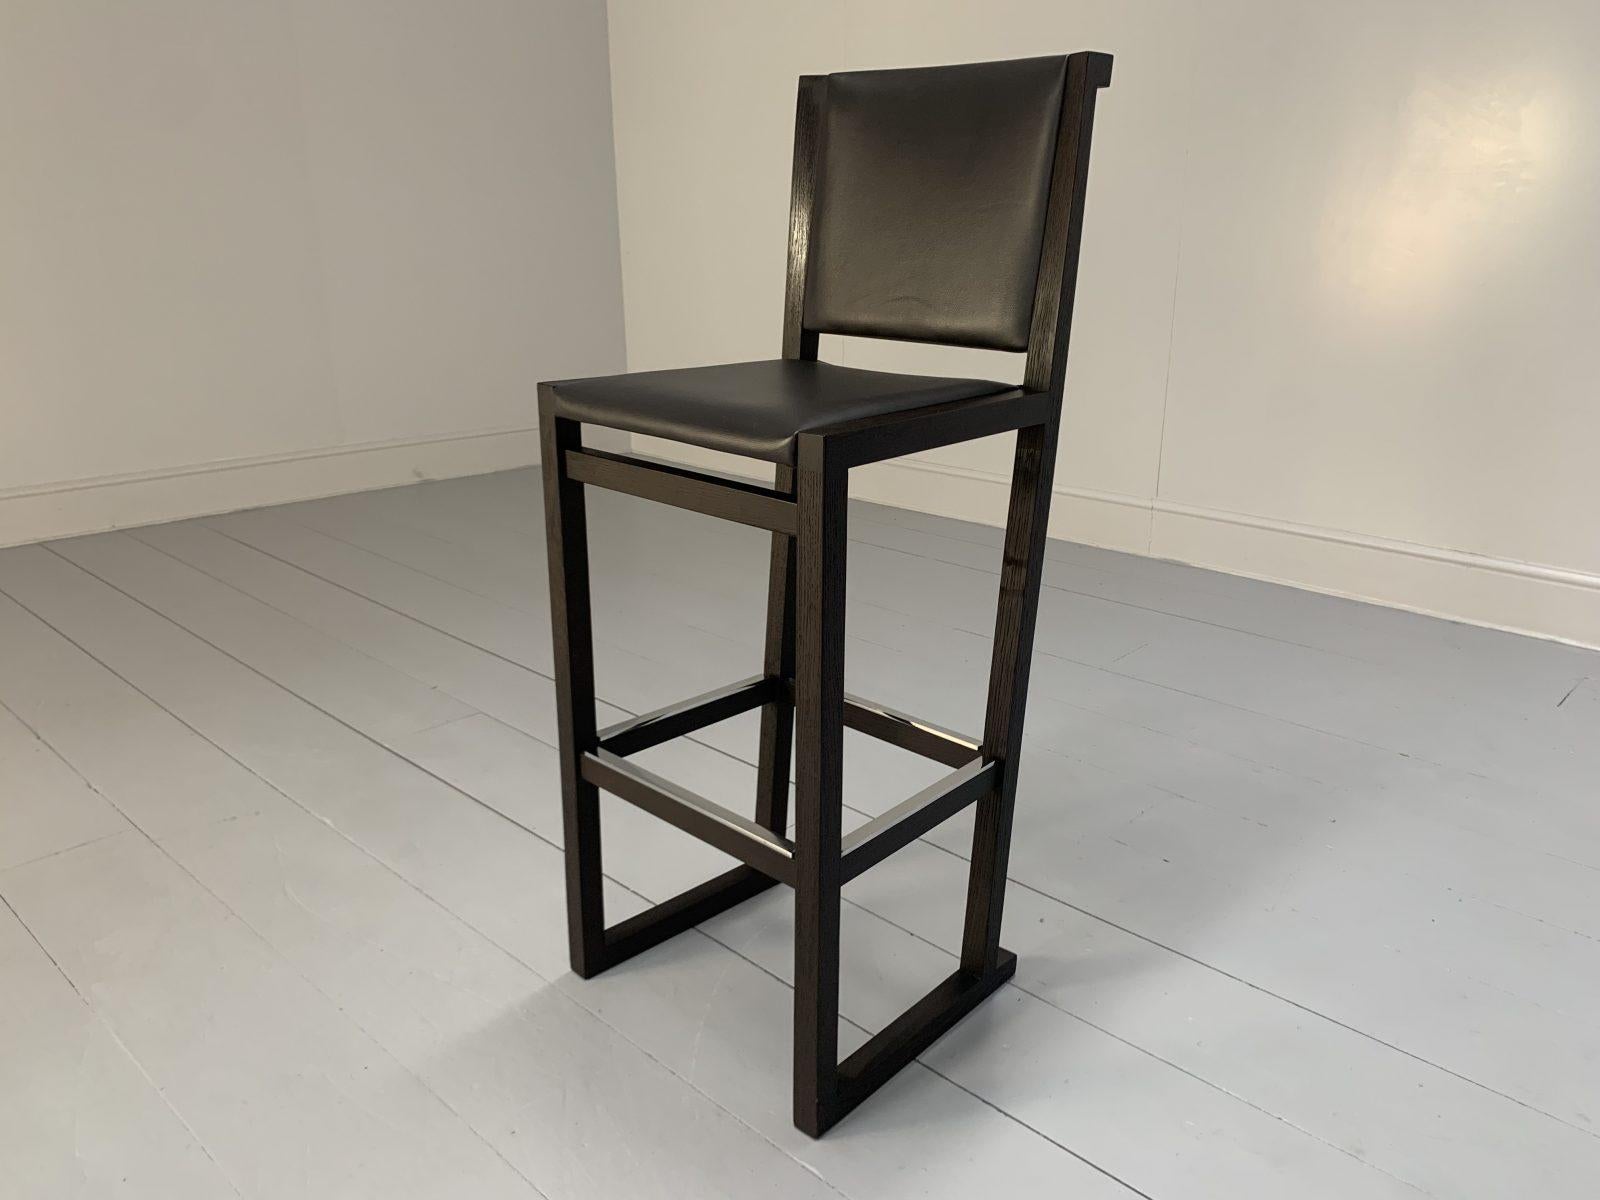 Pair of B&B Italia “Musa SM46G” Tall Bar Stool Chairs – In Dark Grey “Kasia” Lea For Sale 3